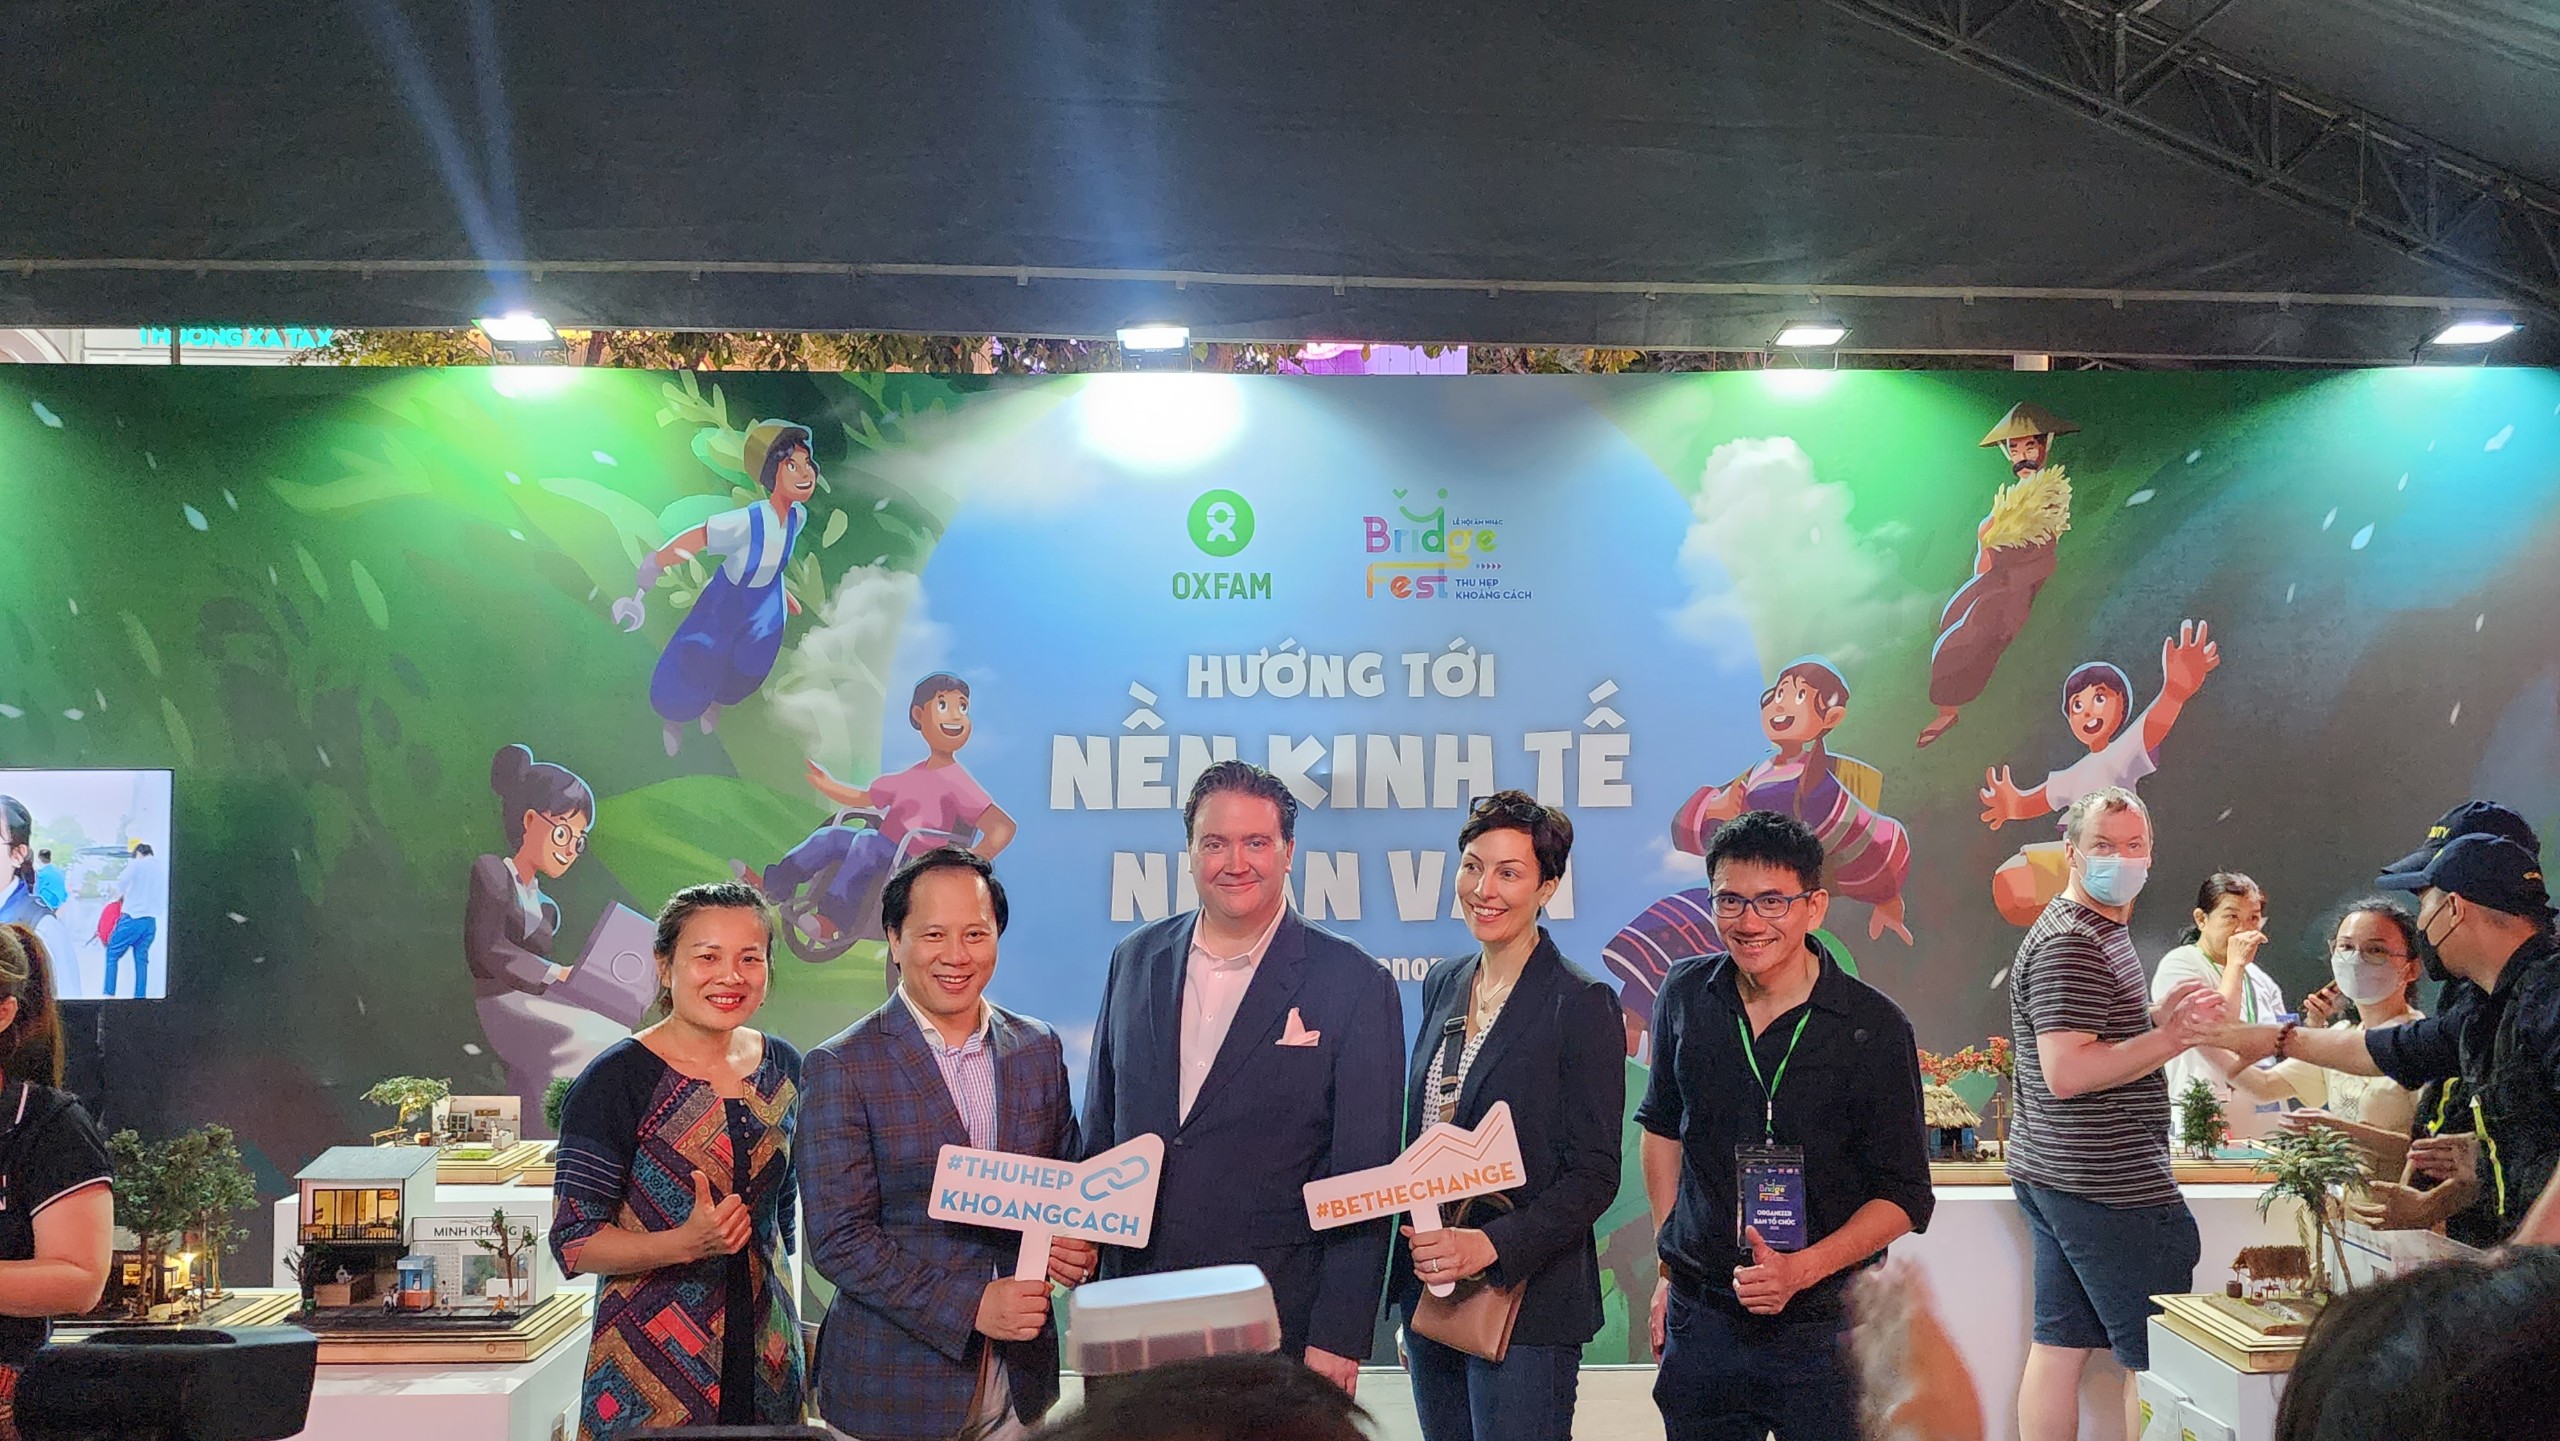 Ho Chi Minh City music festival bridges gap, celebrates human economy